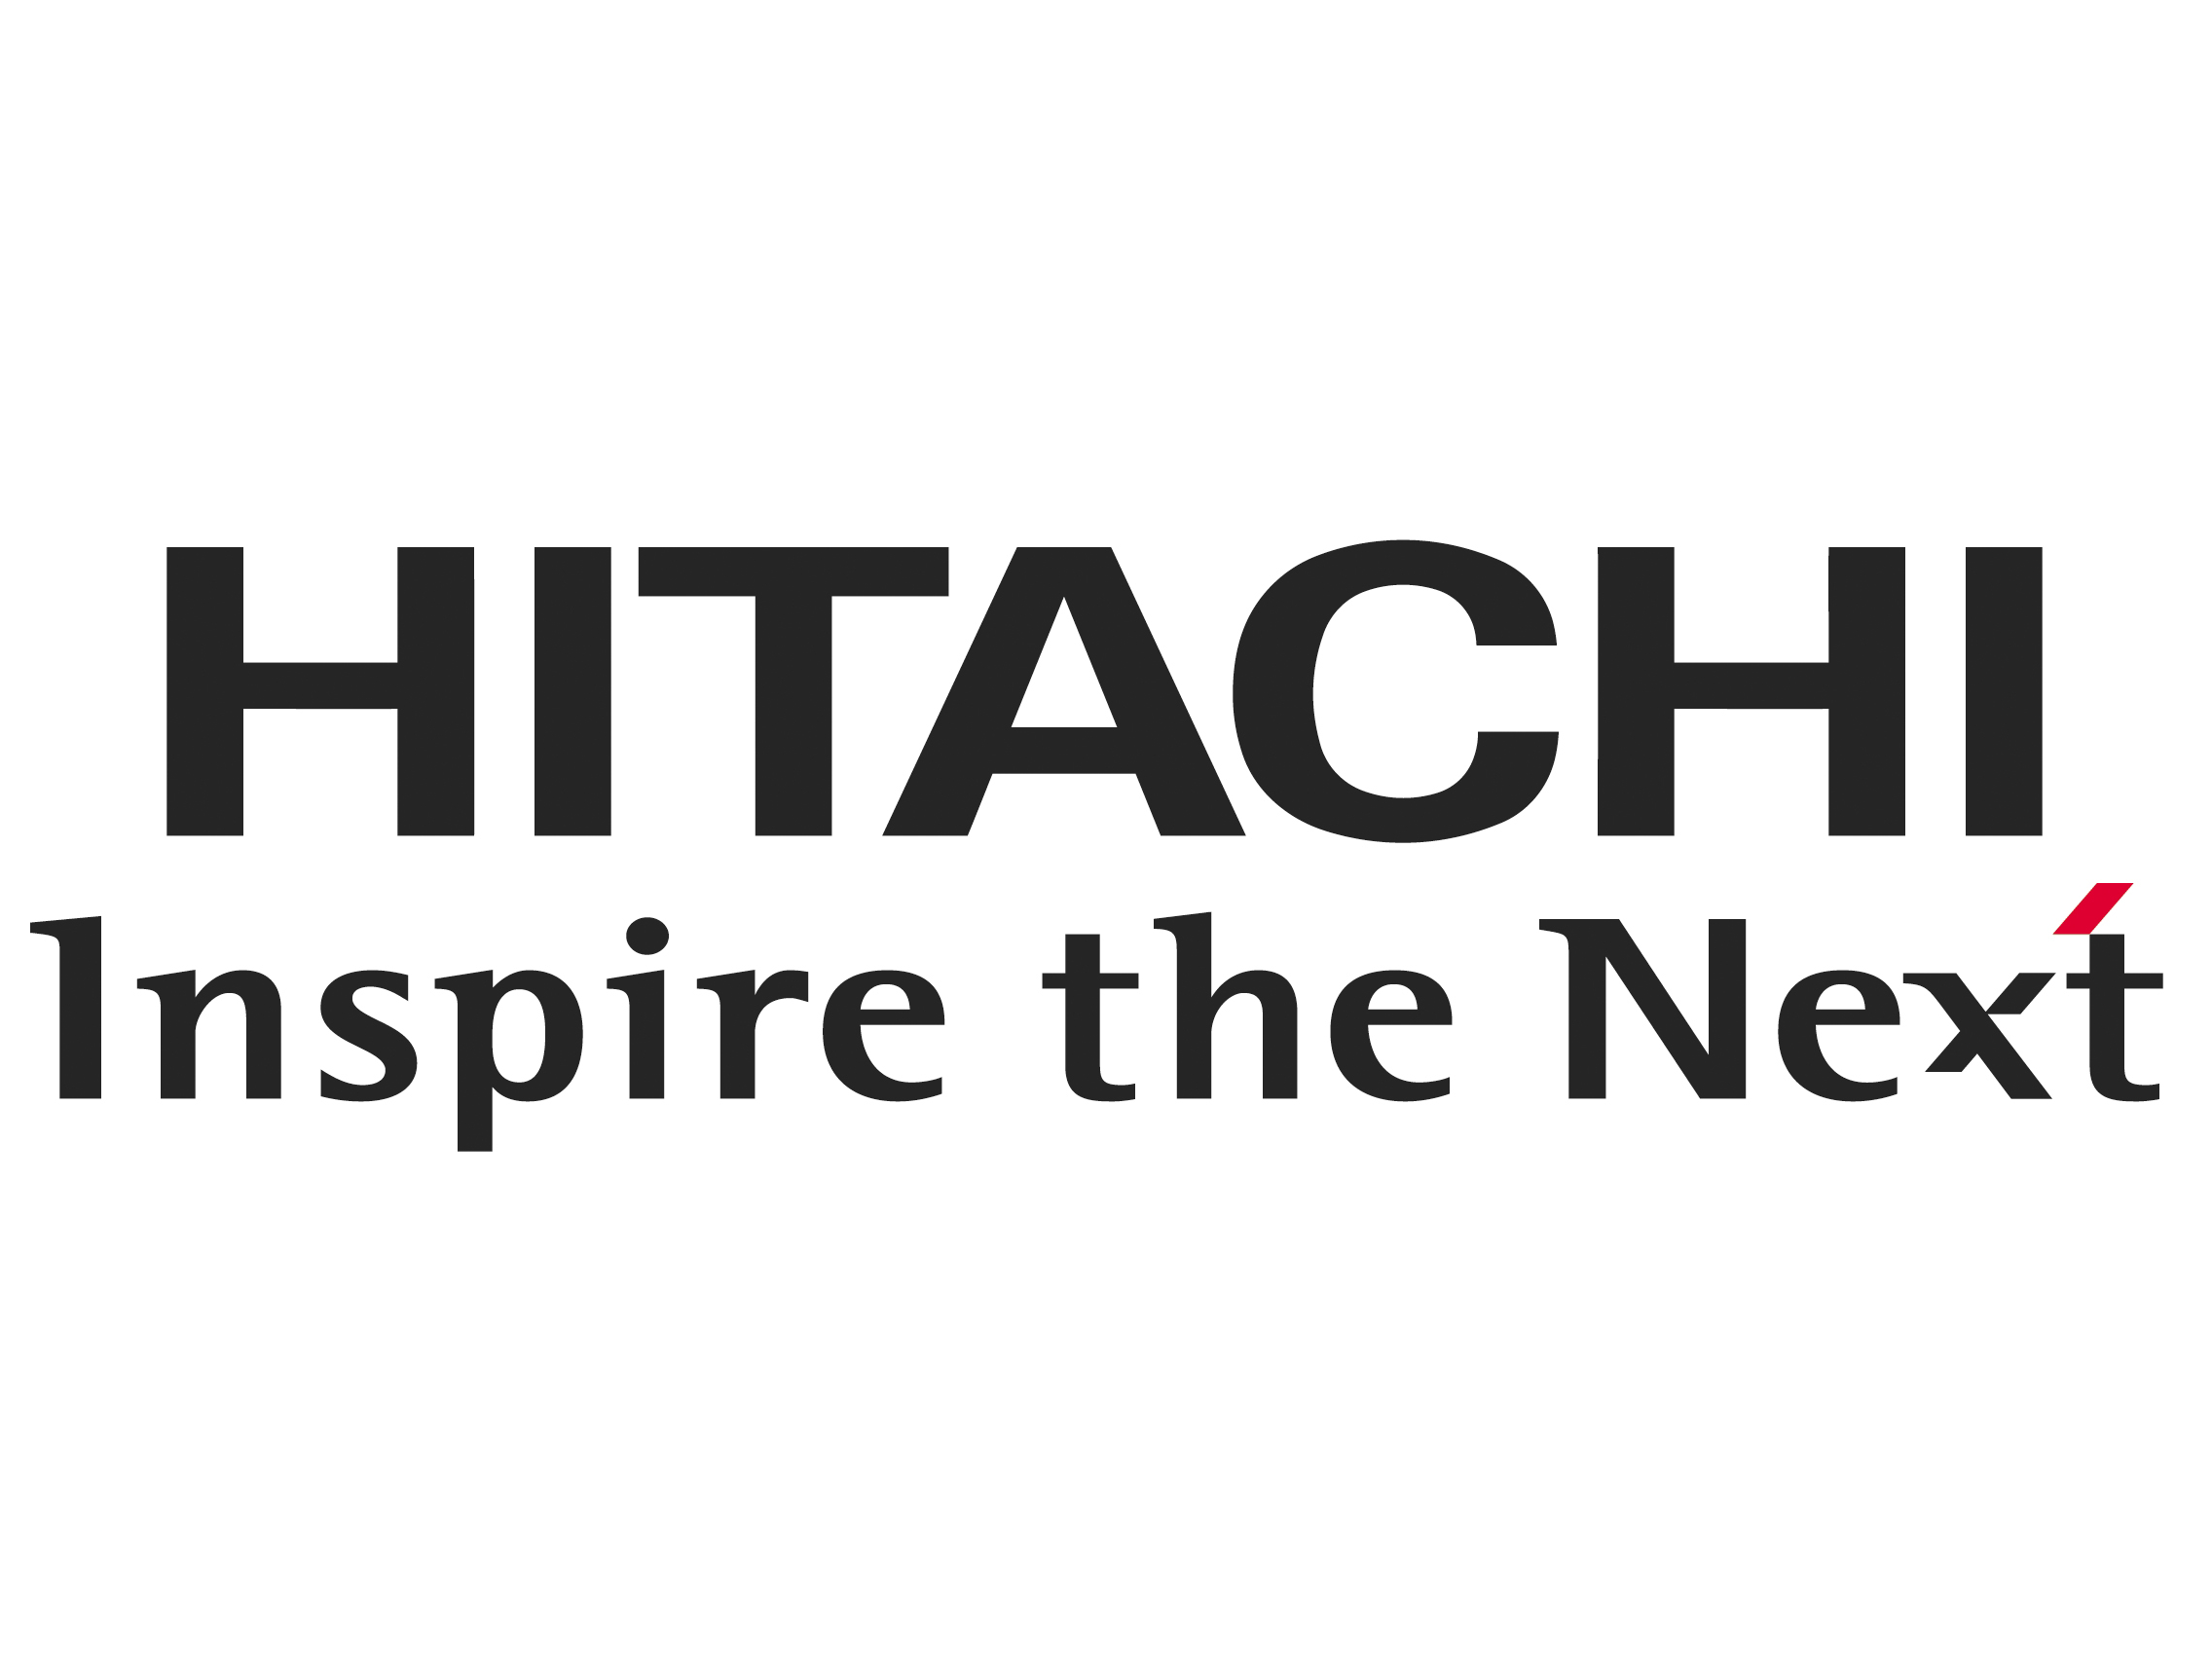 Hitachi-logo-and-slogan